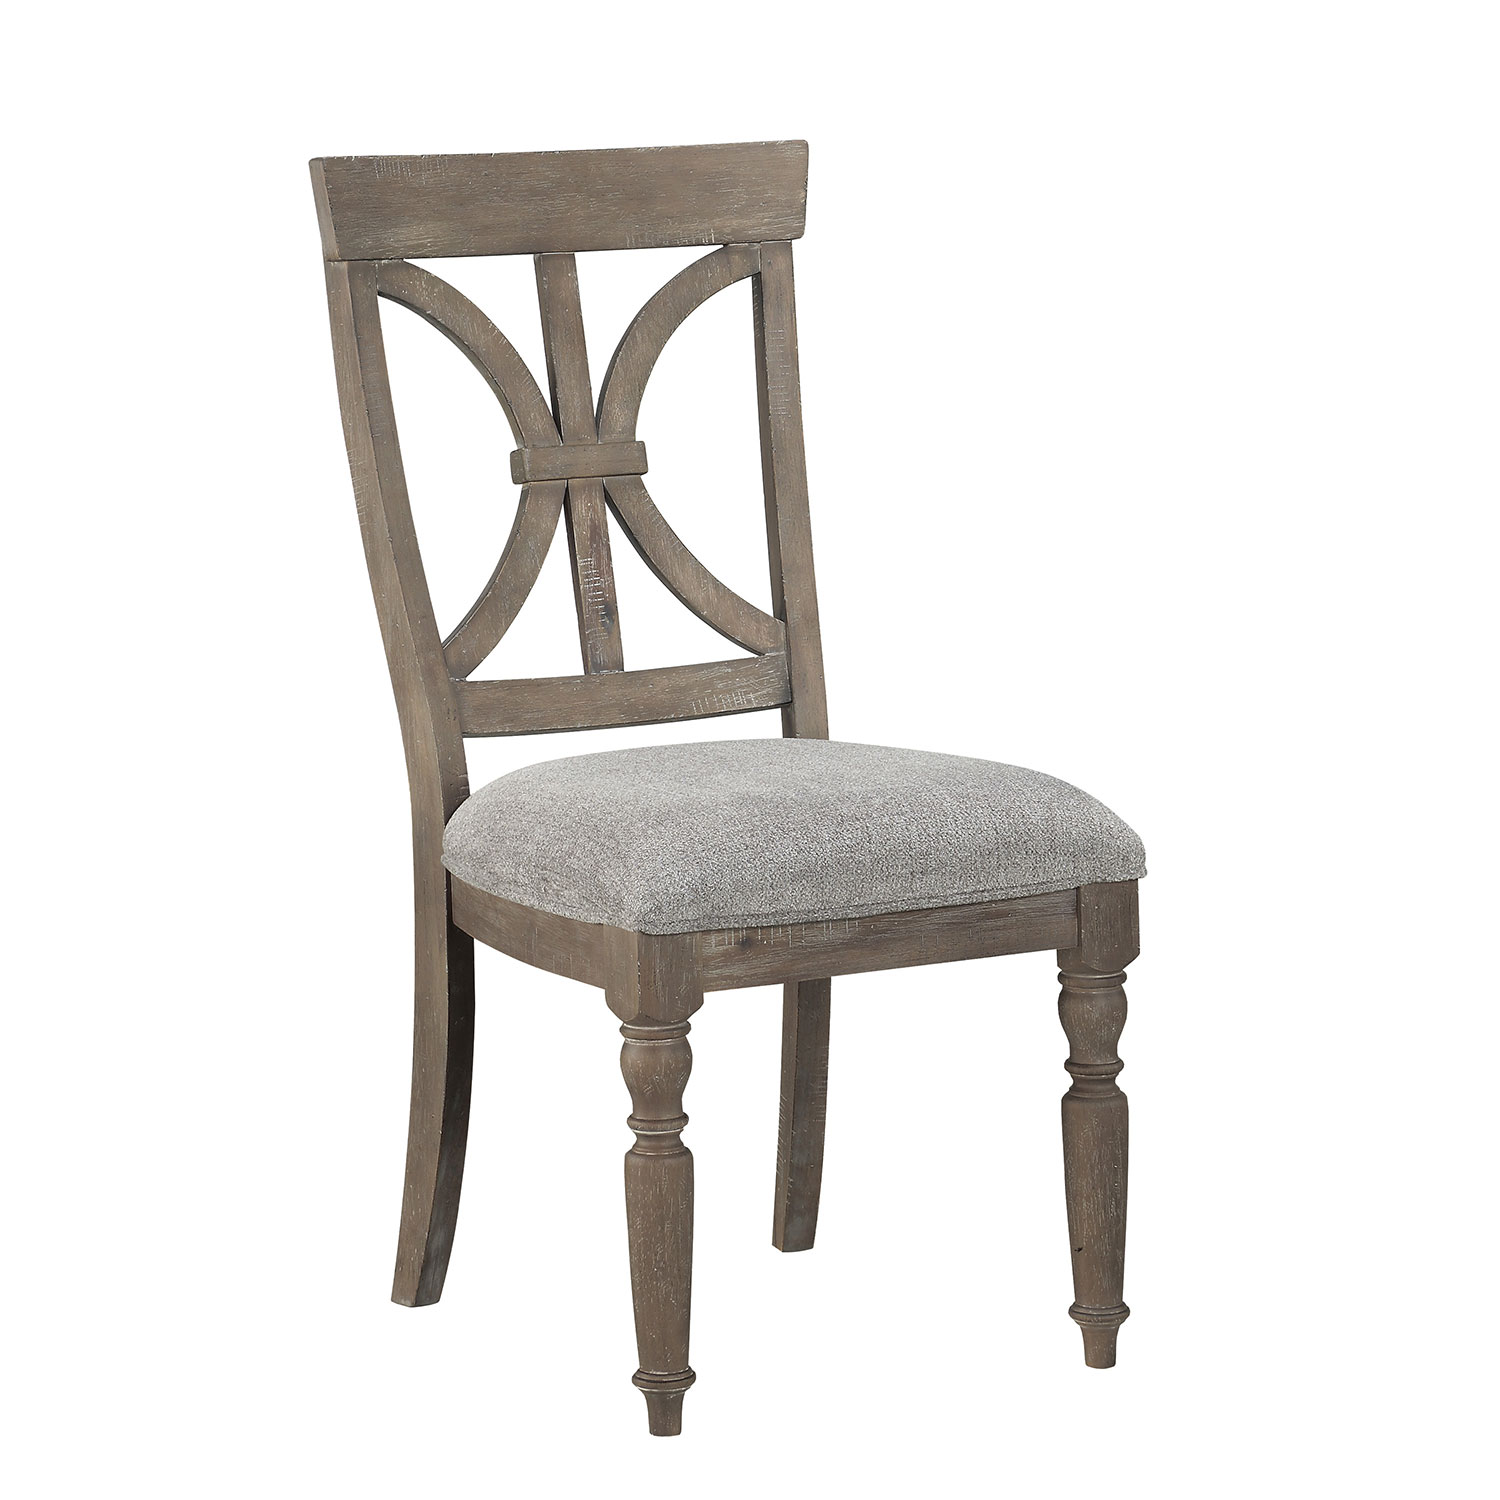 Homelegance Cardano Side Chair - Driftwood Light Brown